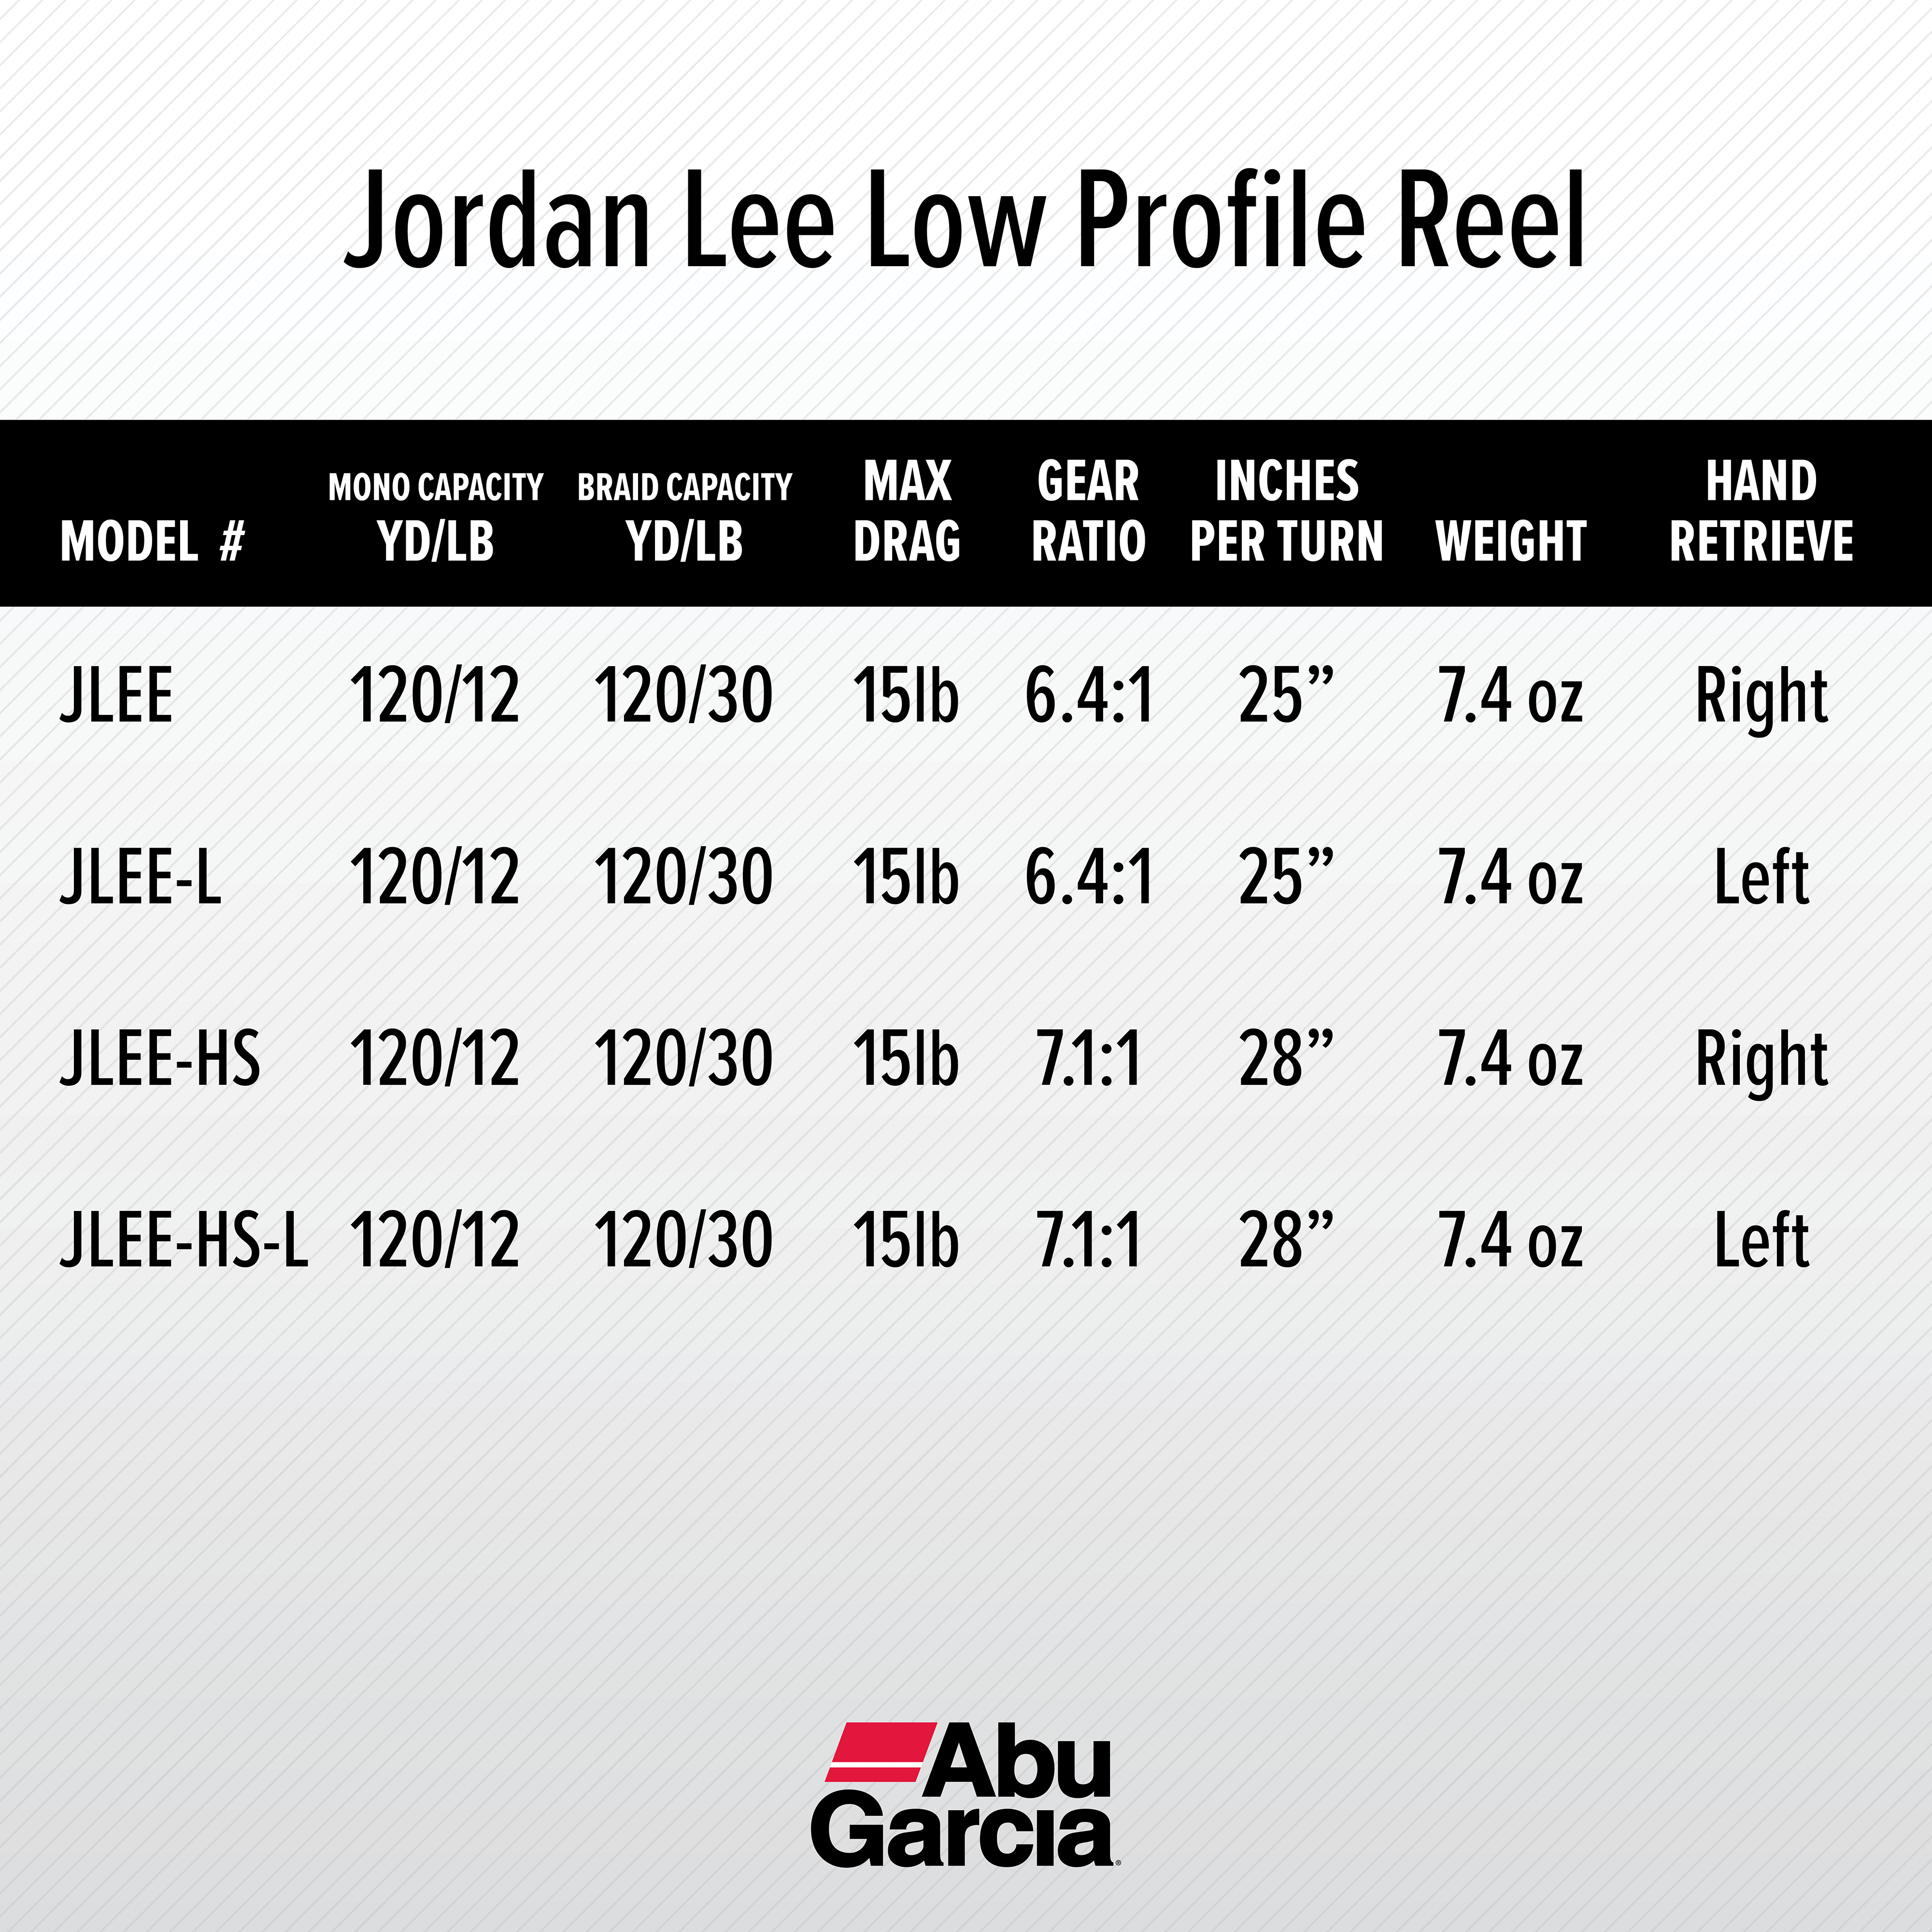 Abu Garcia Jordan Lee Low Profile Baitcast Fishing Reel (1548315) - image 2 of 4